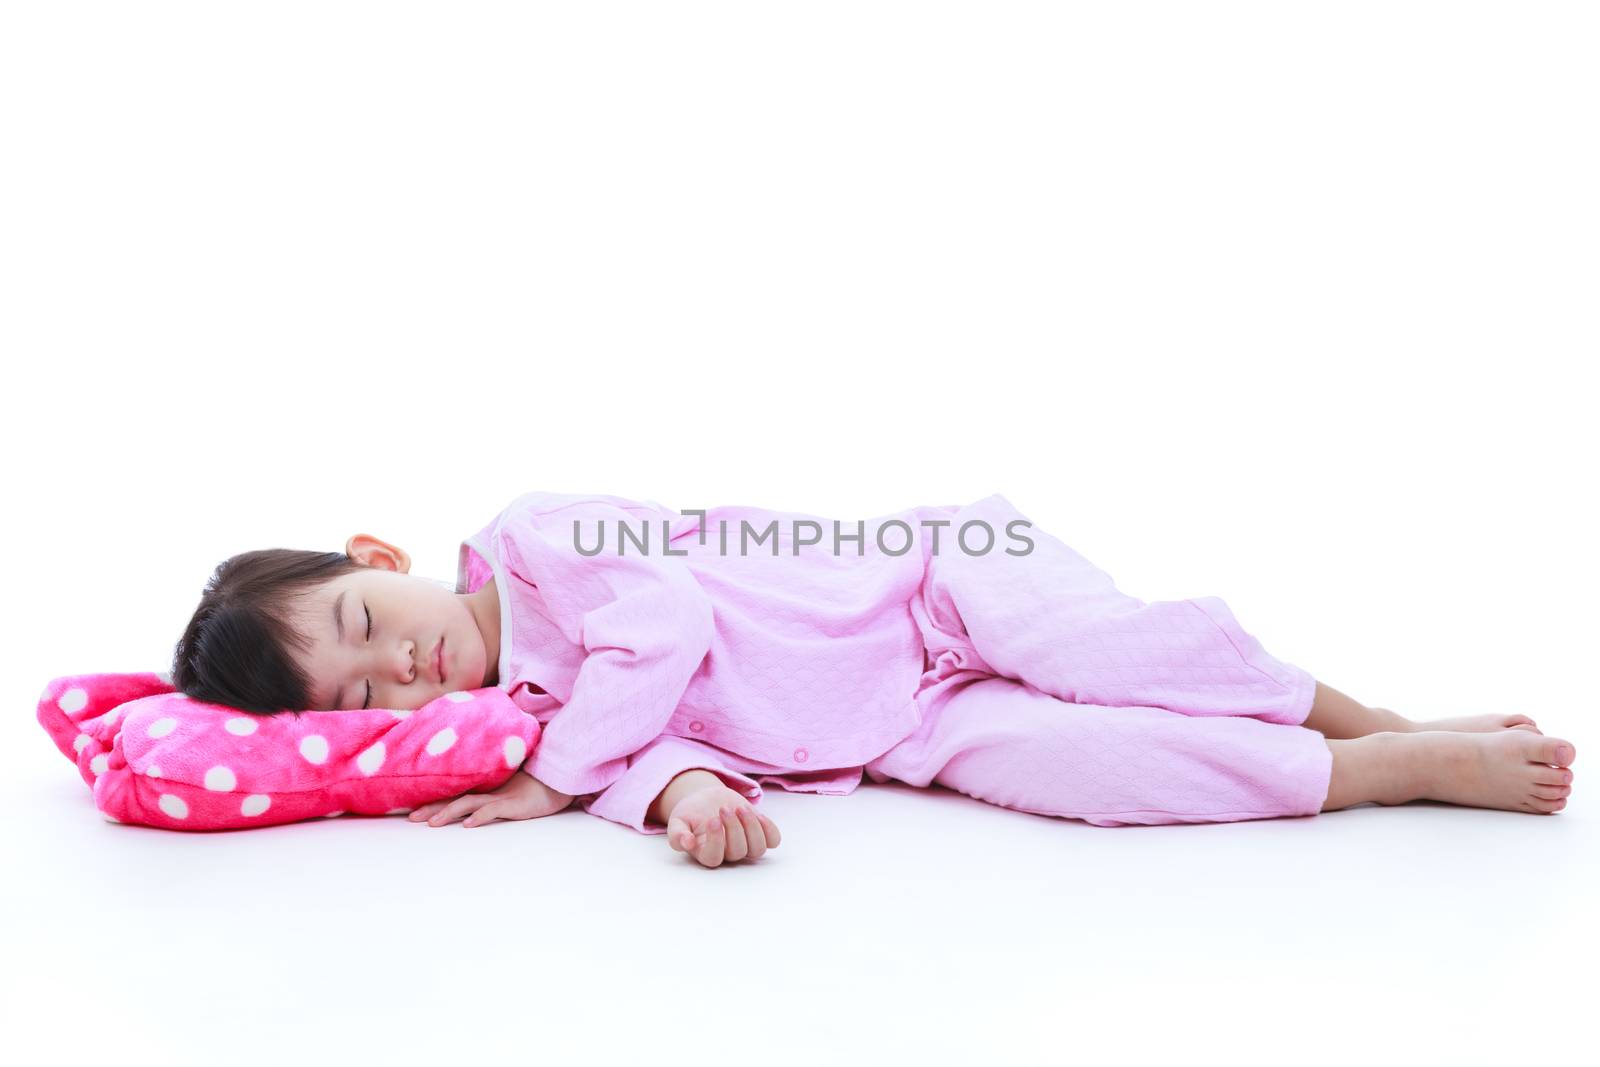 Full body. Healthy children concept. Asian girl sleeping peacefu by kdshutterman